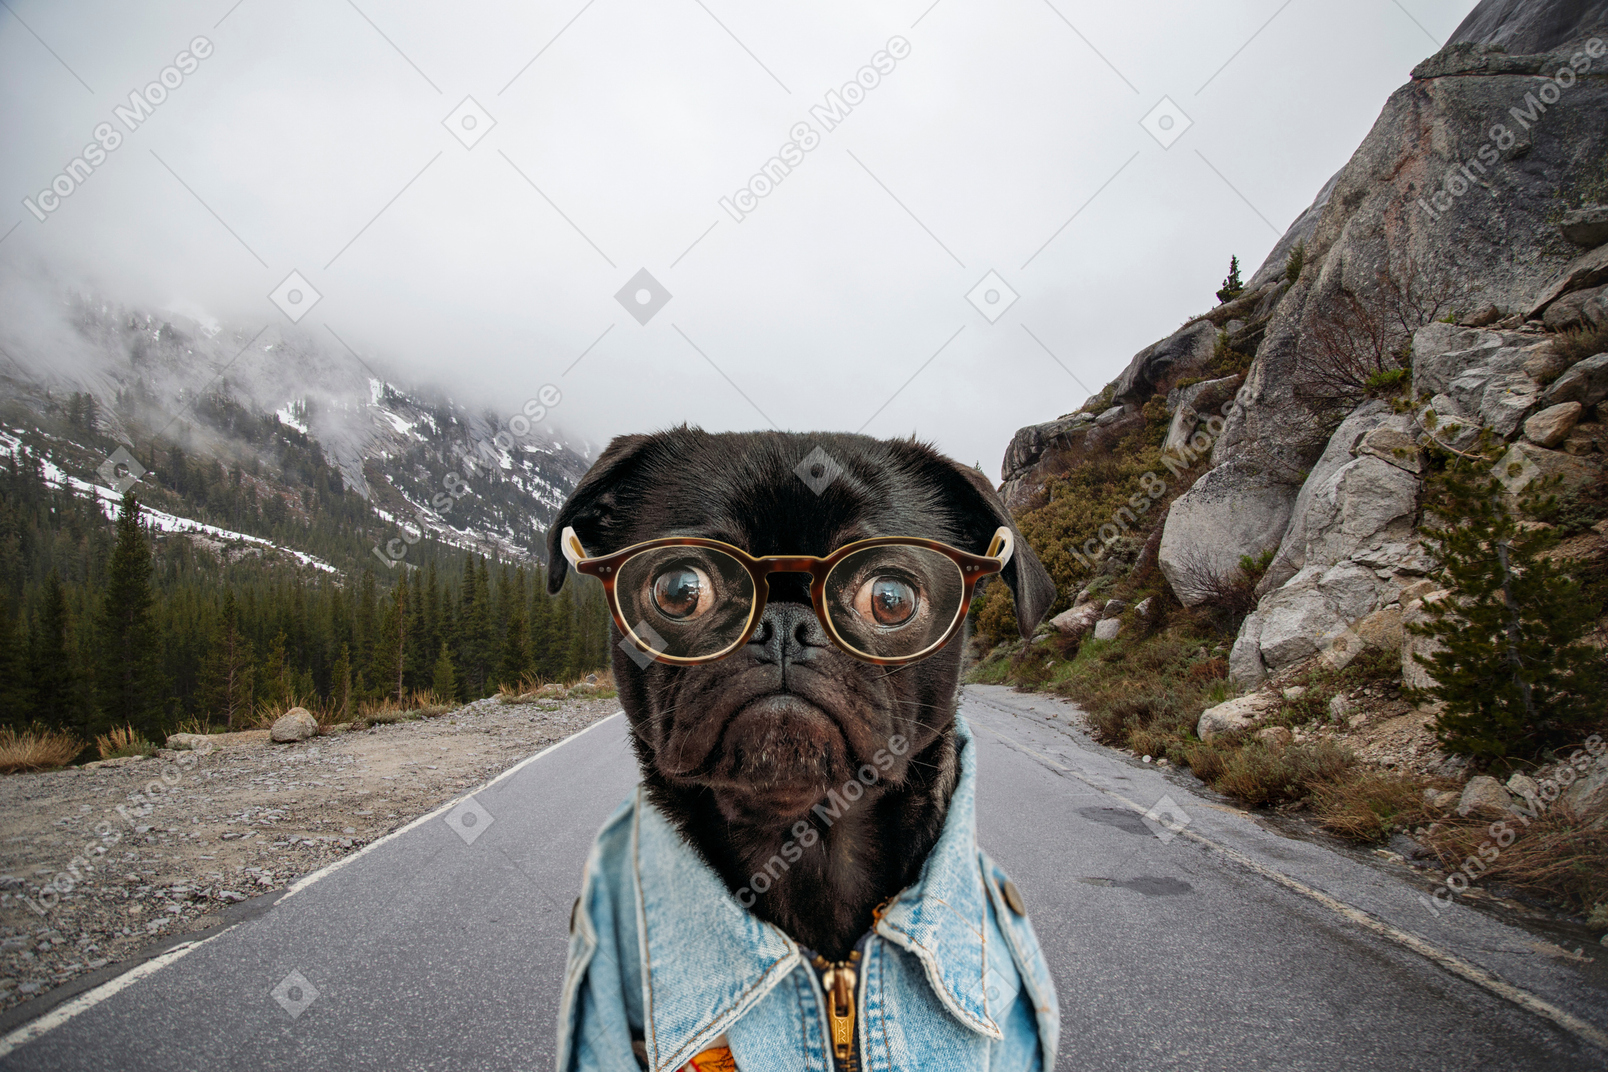 A black dog wearing glasses and a denim jacket